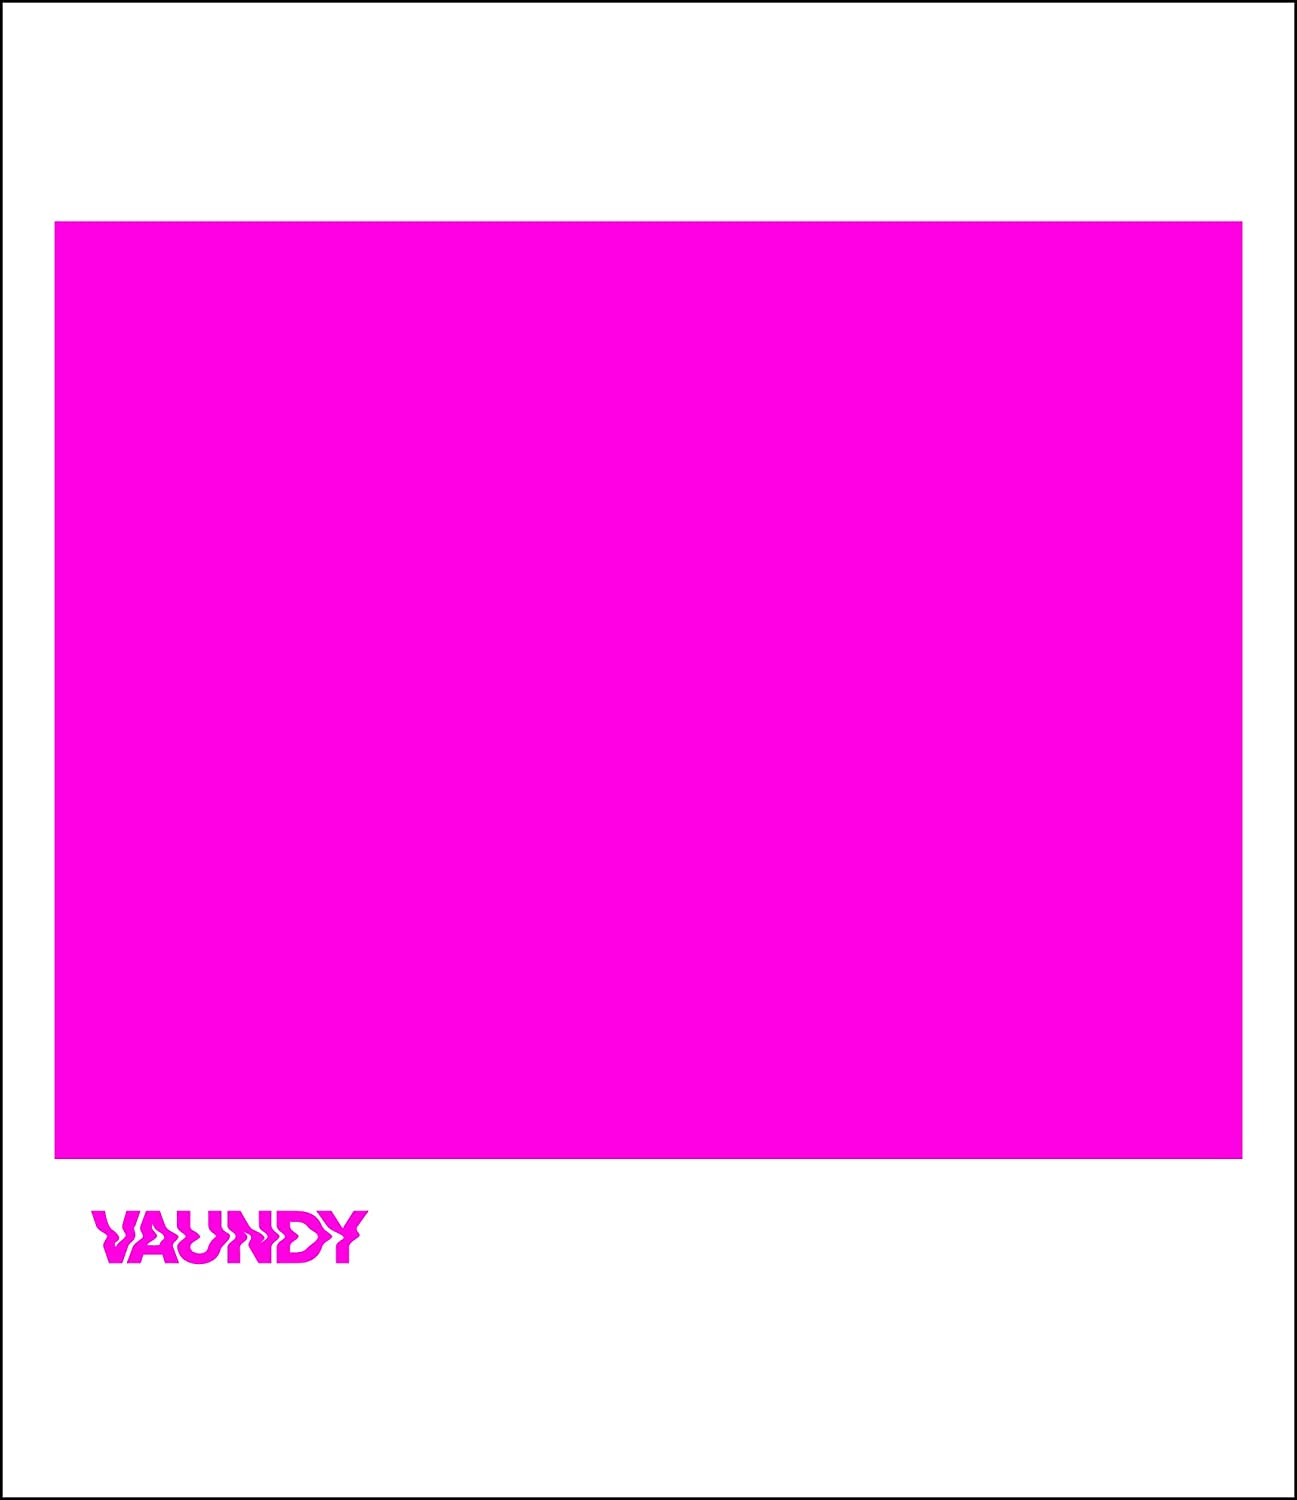 Vaundy strobo+ アナログ盤 アルバム レコード LP バウンディ - レコード